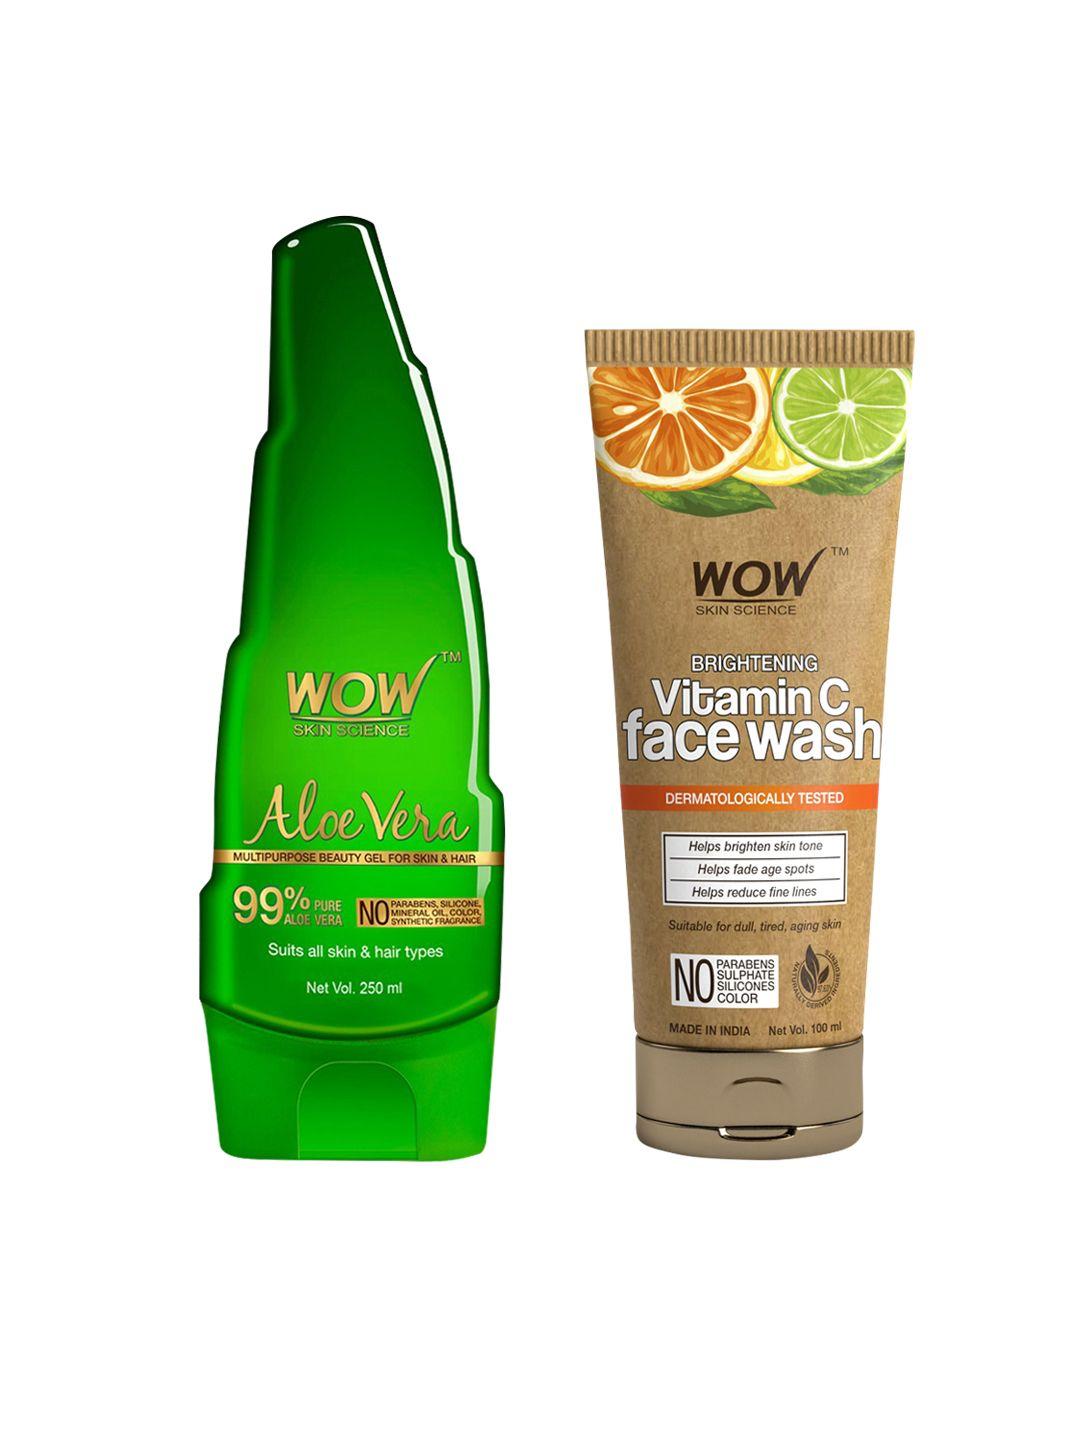 wow skin science set of pure aloe vera gel & vitamin c face wash